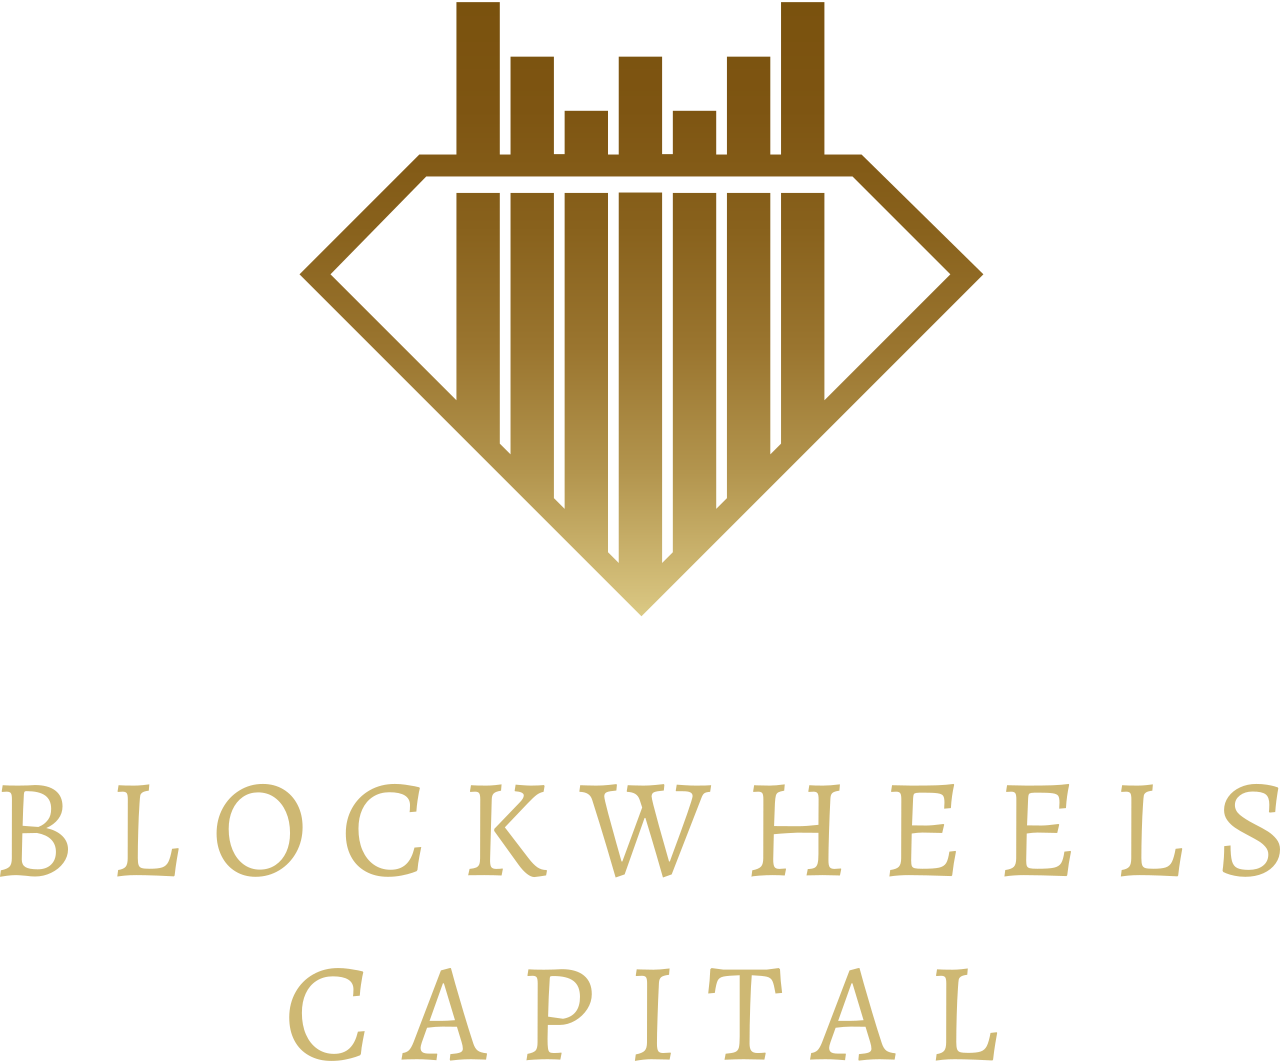 BLOCKWHEELS
CAPITAL's web page